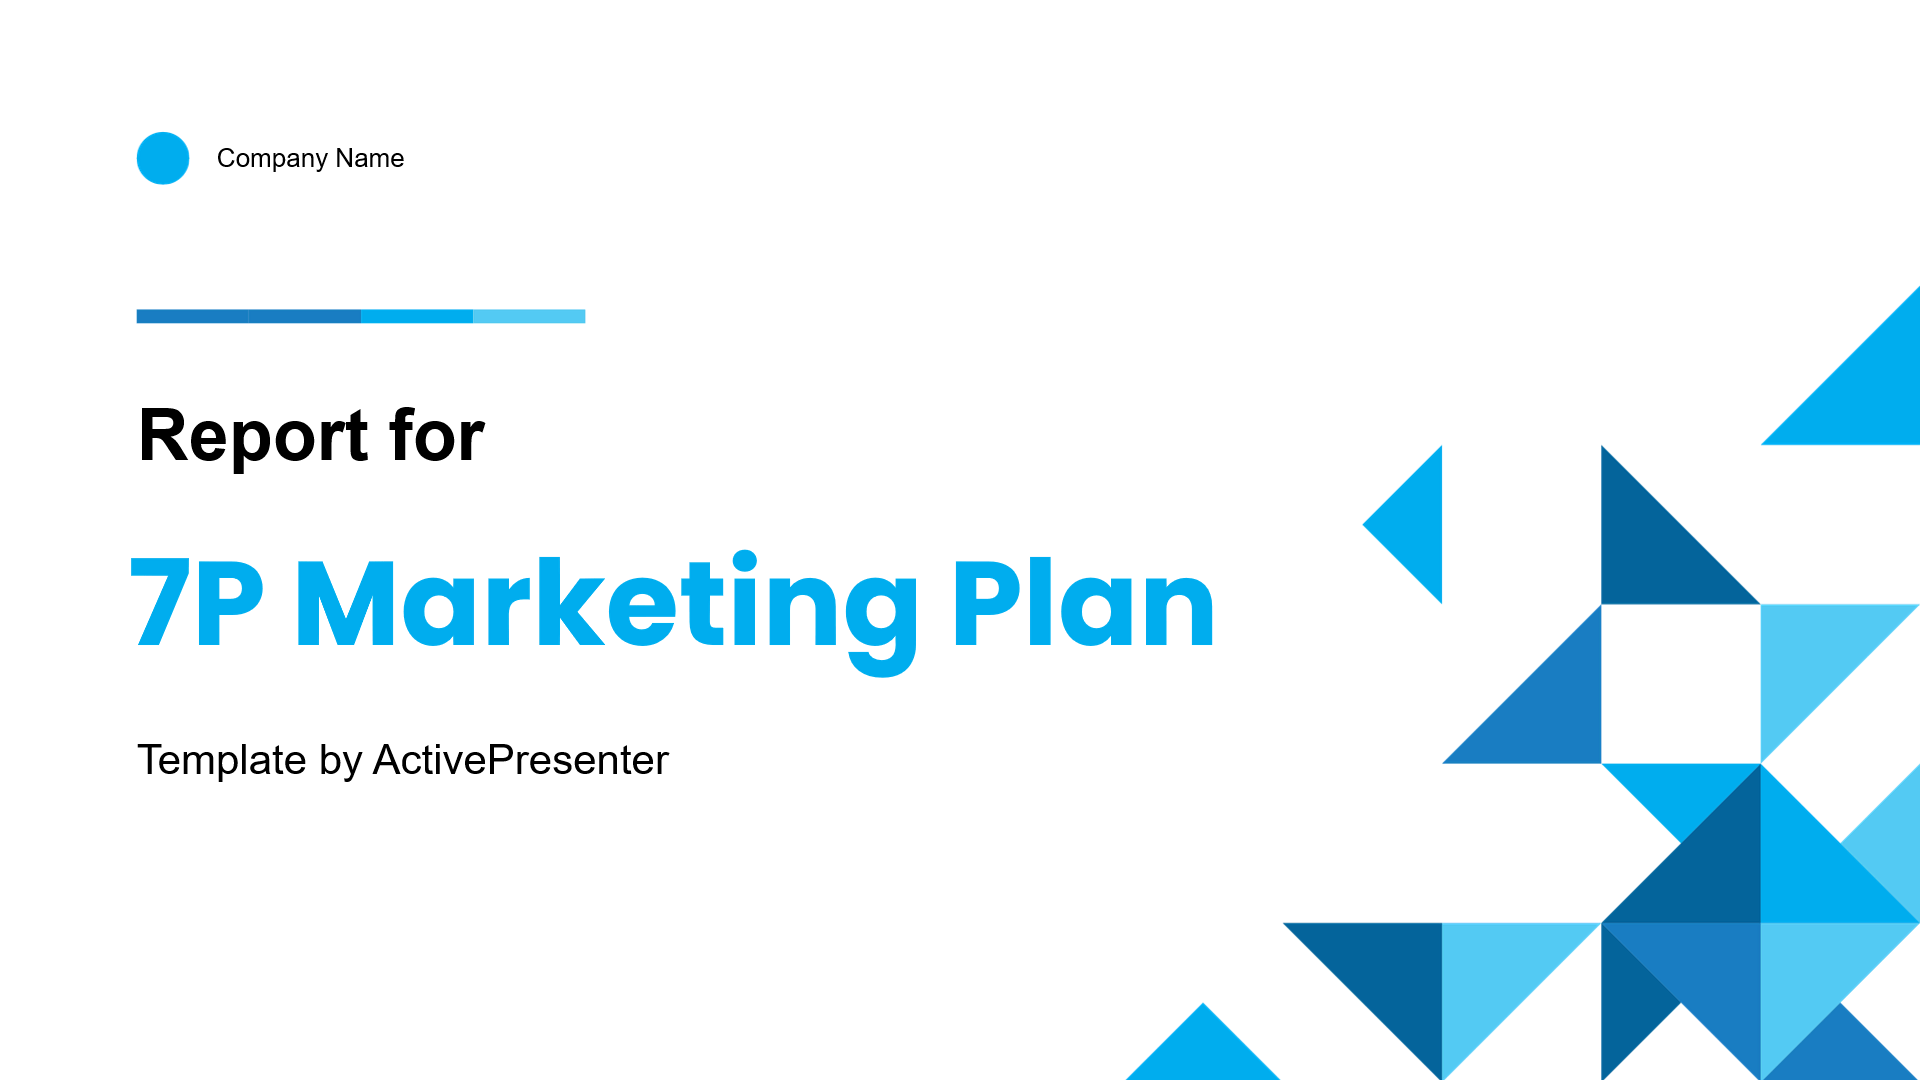 7P Marketing Plan